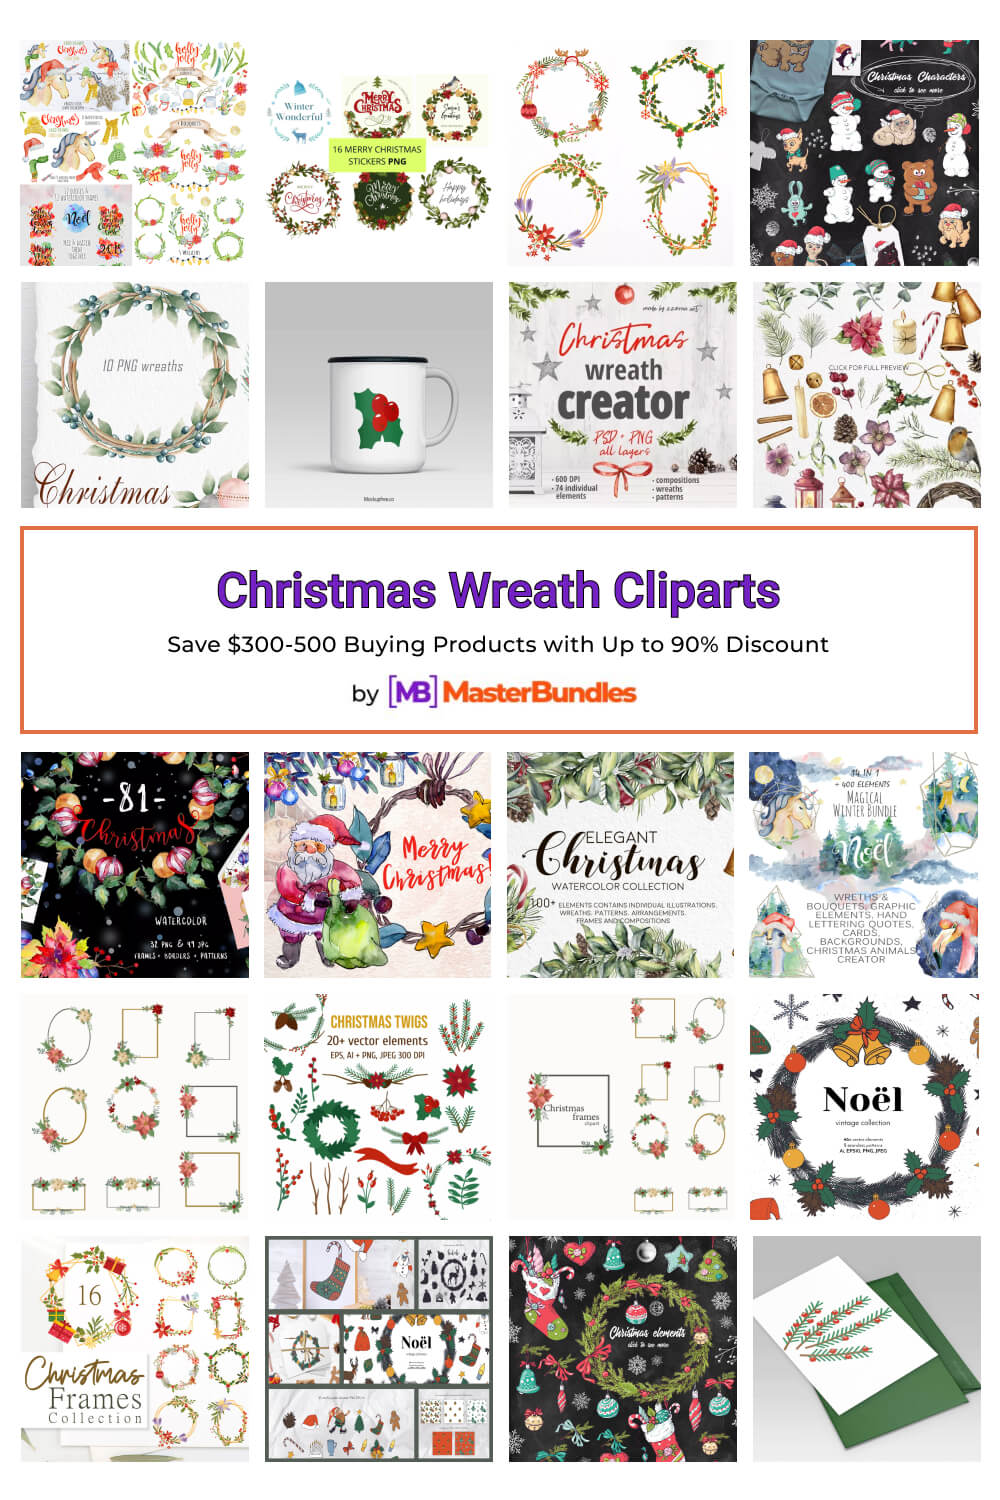 christmas wreath cliparts pinterest image.